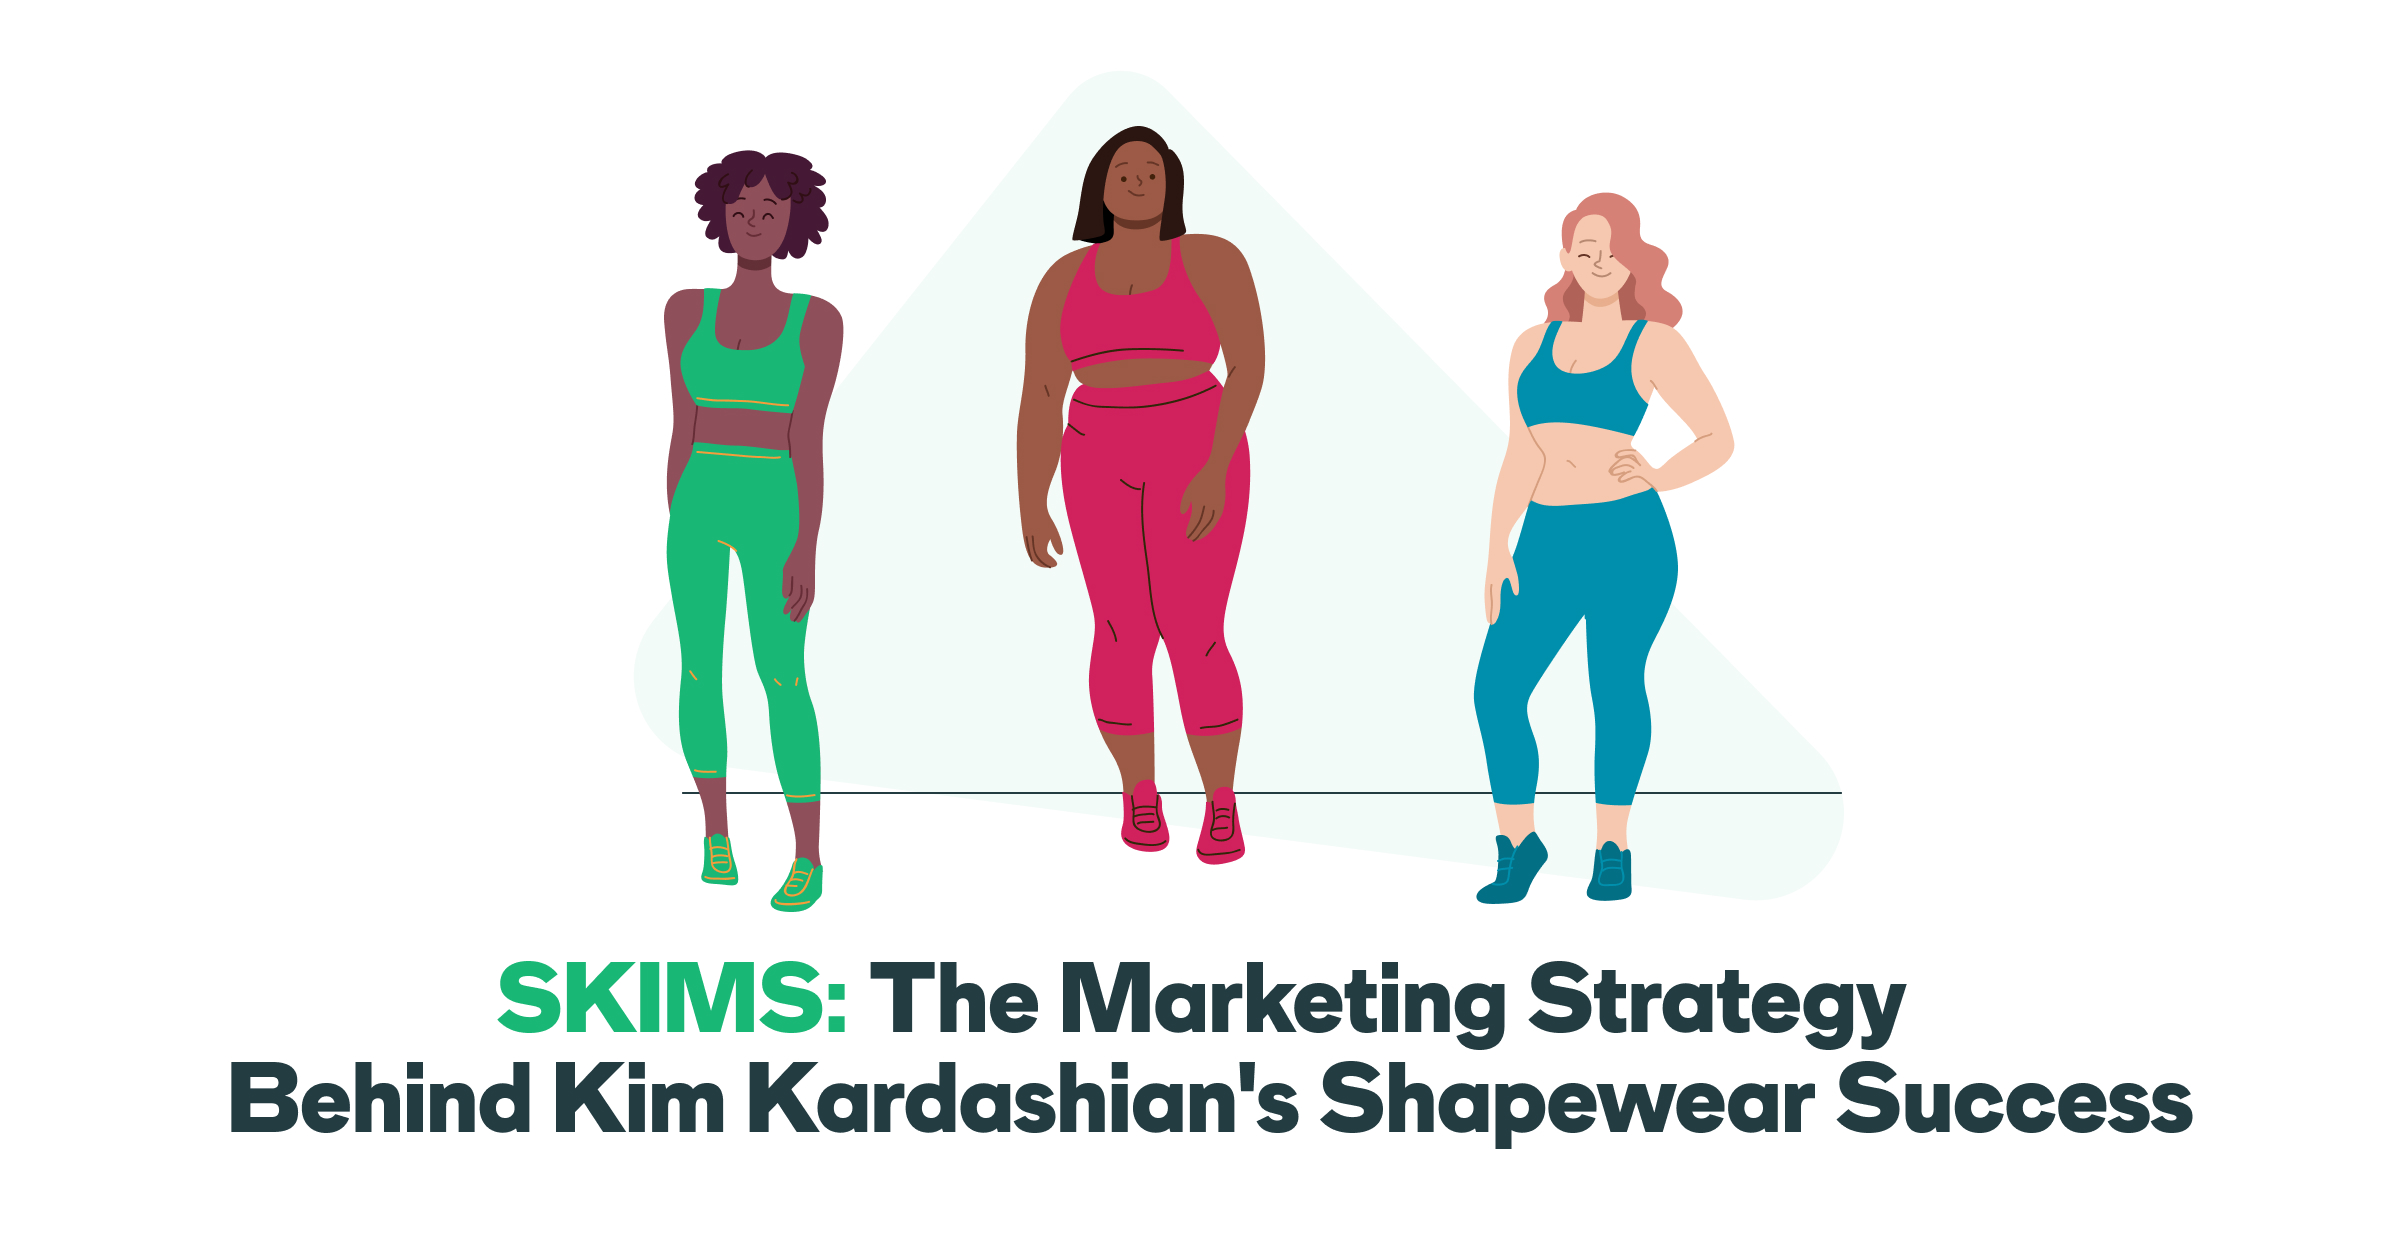 I'm a fashion pro - Target sell a dupe of Kim Kardashian's SKIMS